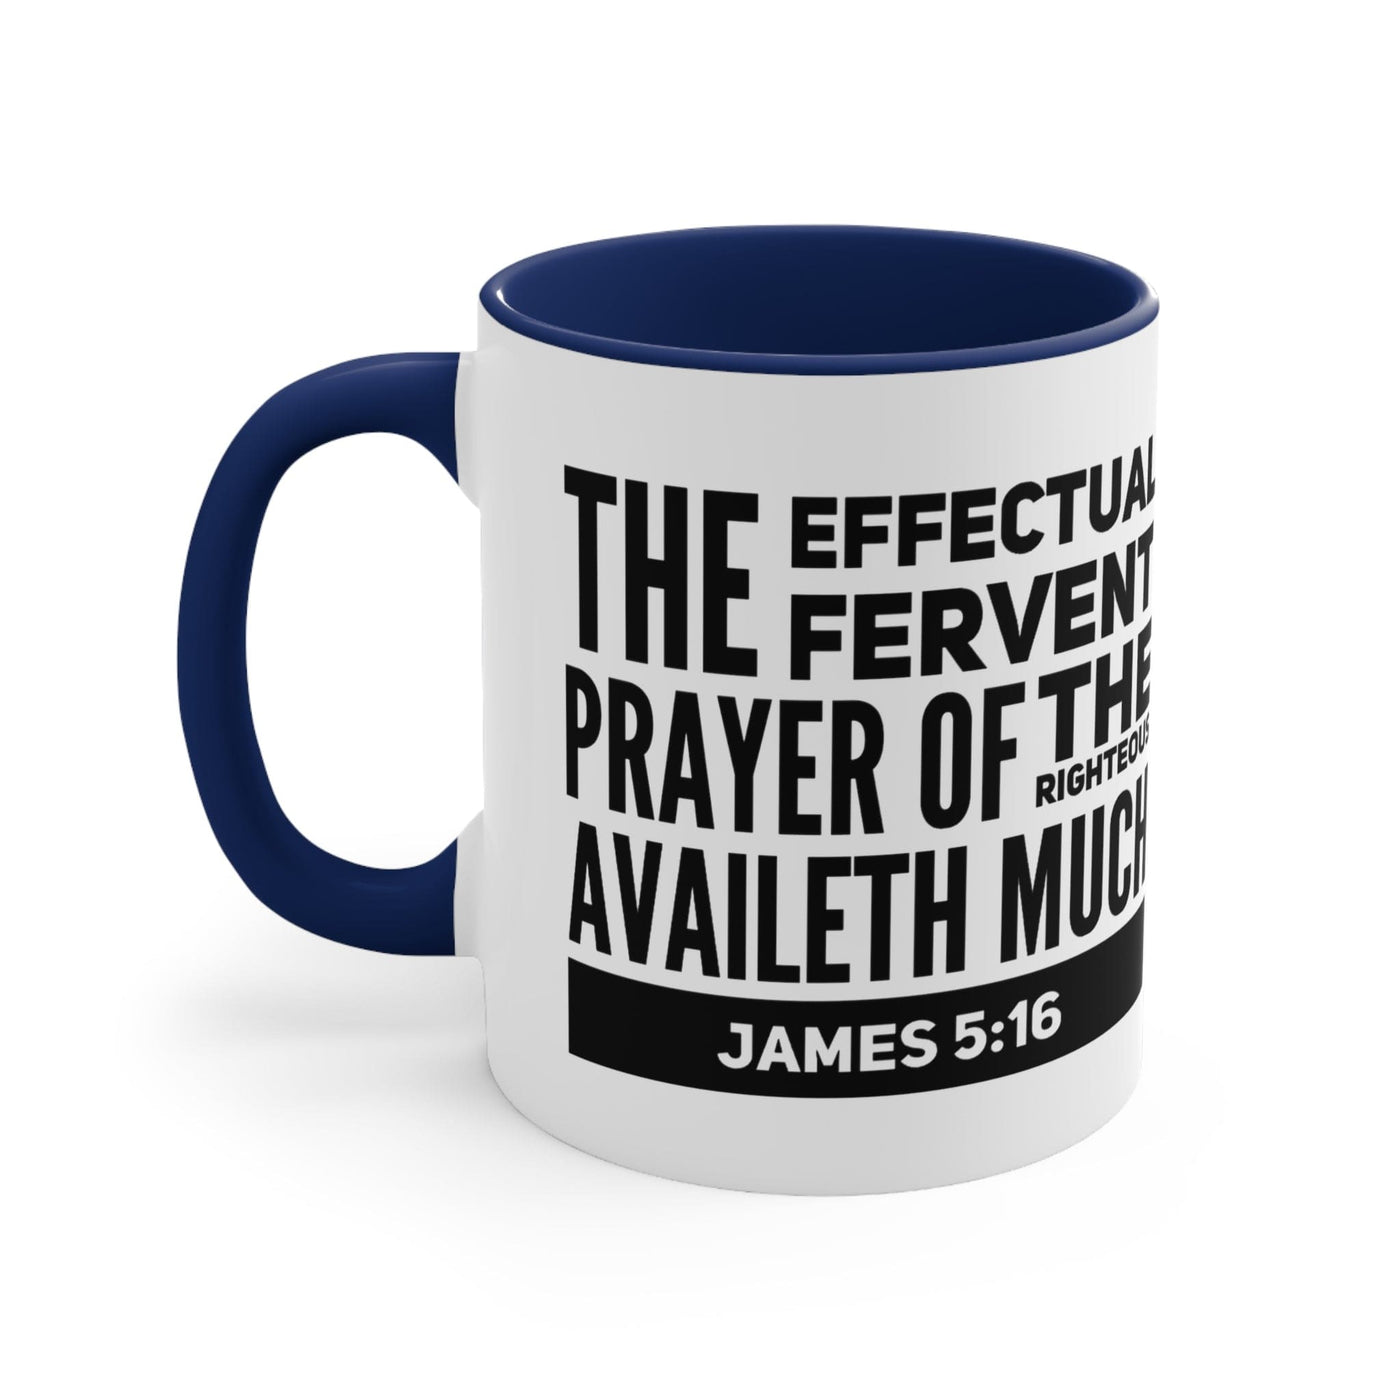 Accent Ceramic Mug 11oz The Effectual Fervent Prayer Black Illustration